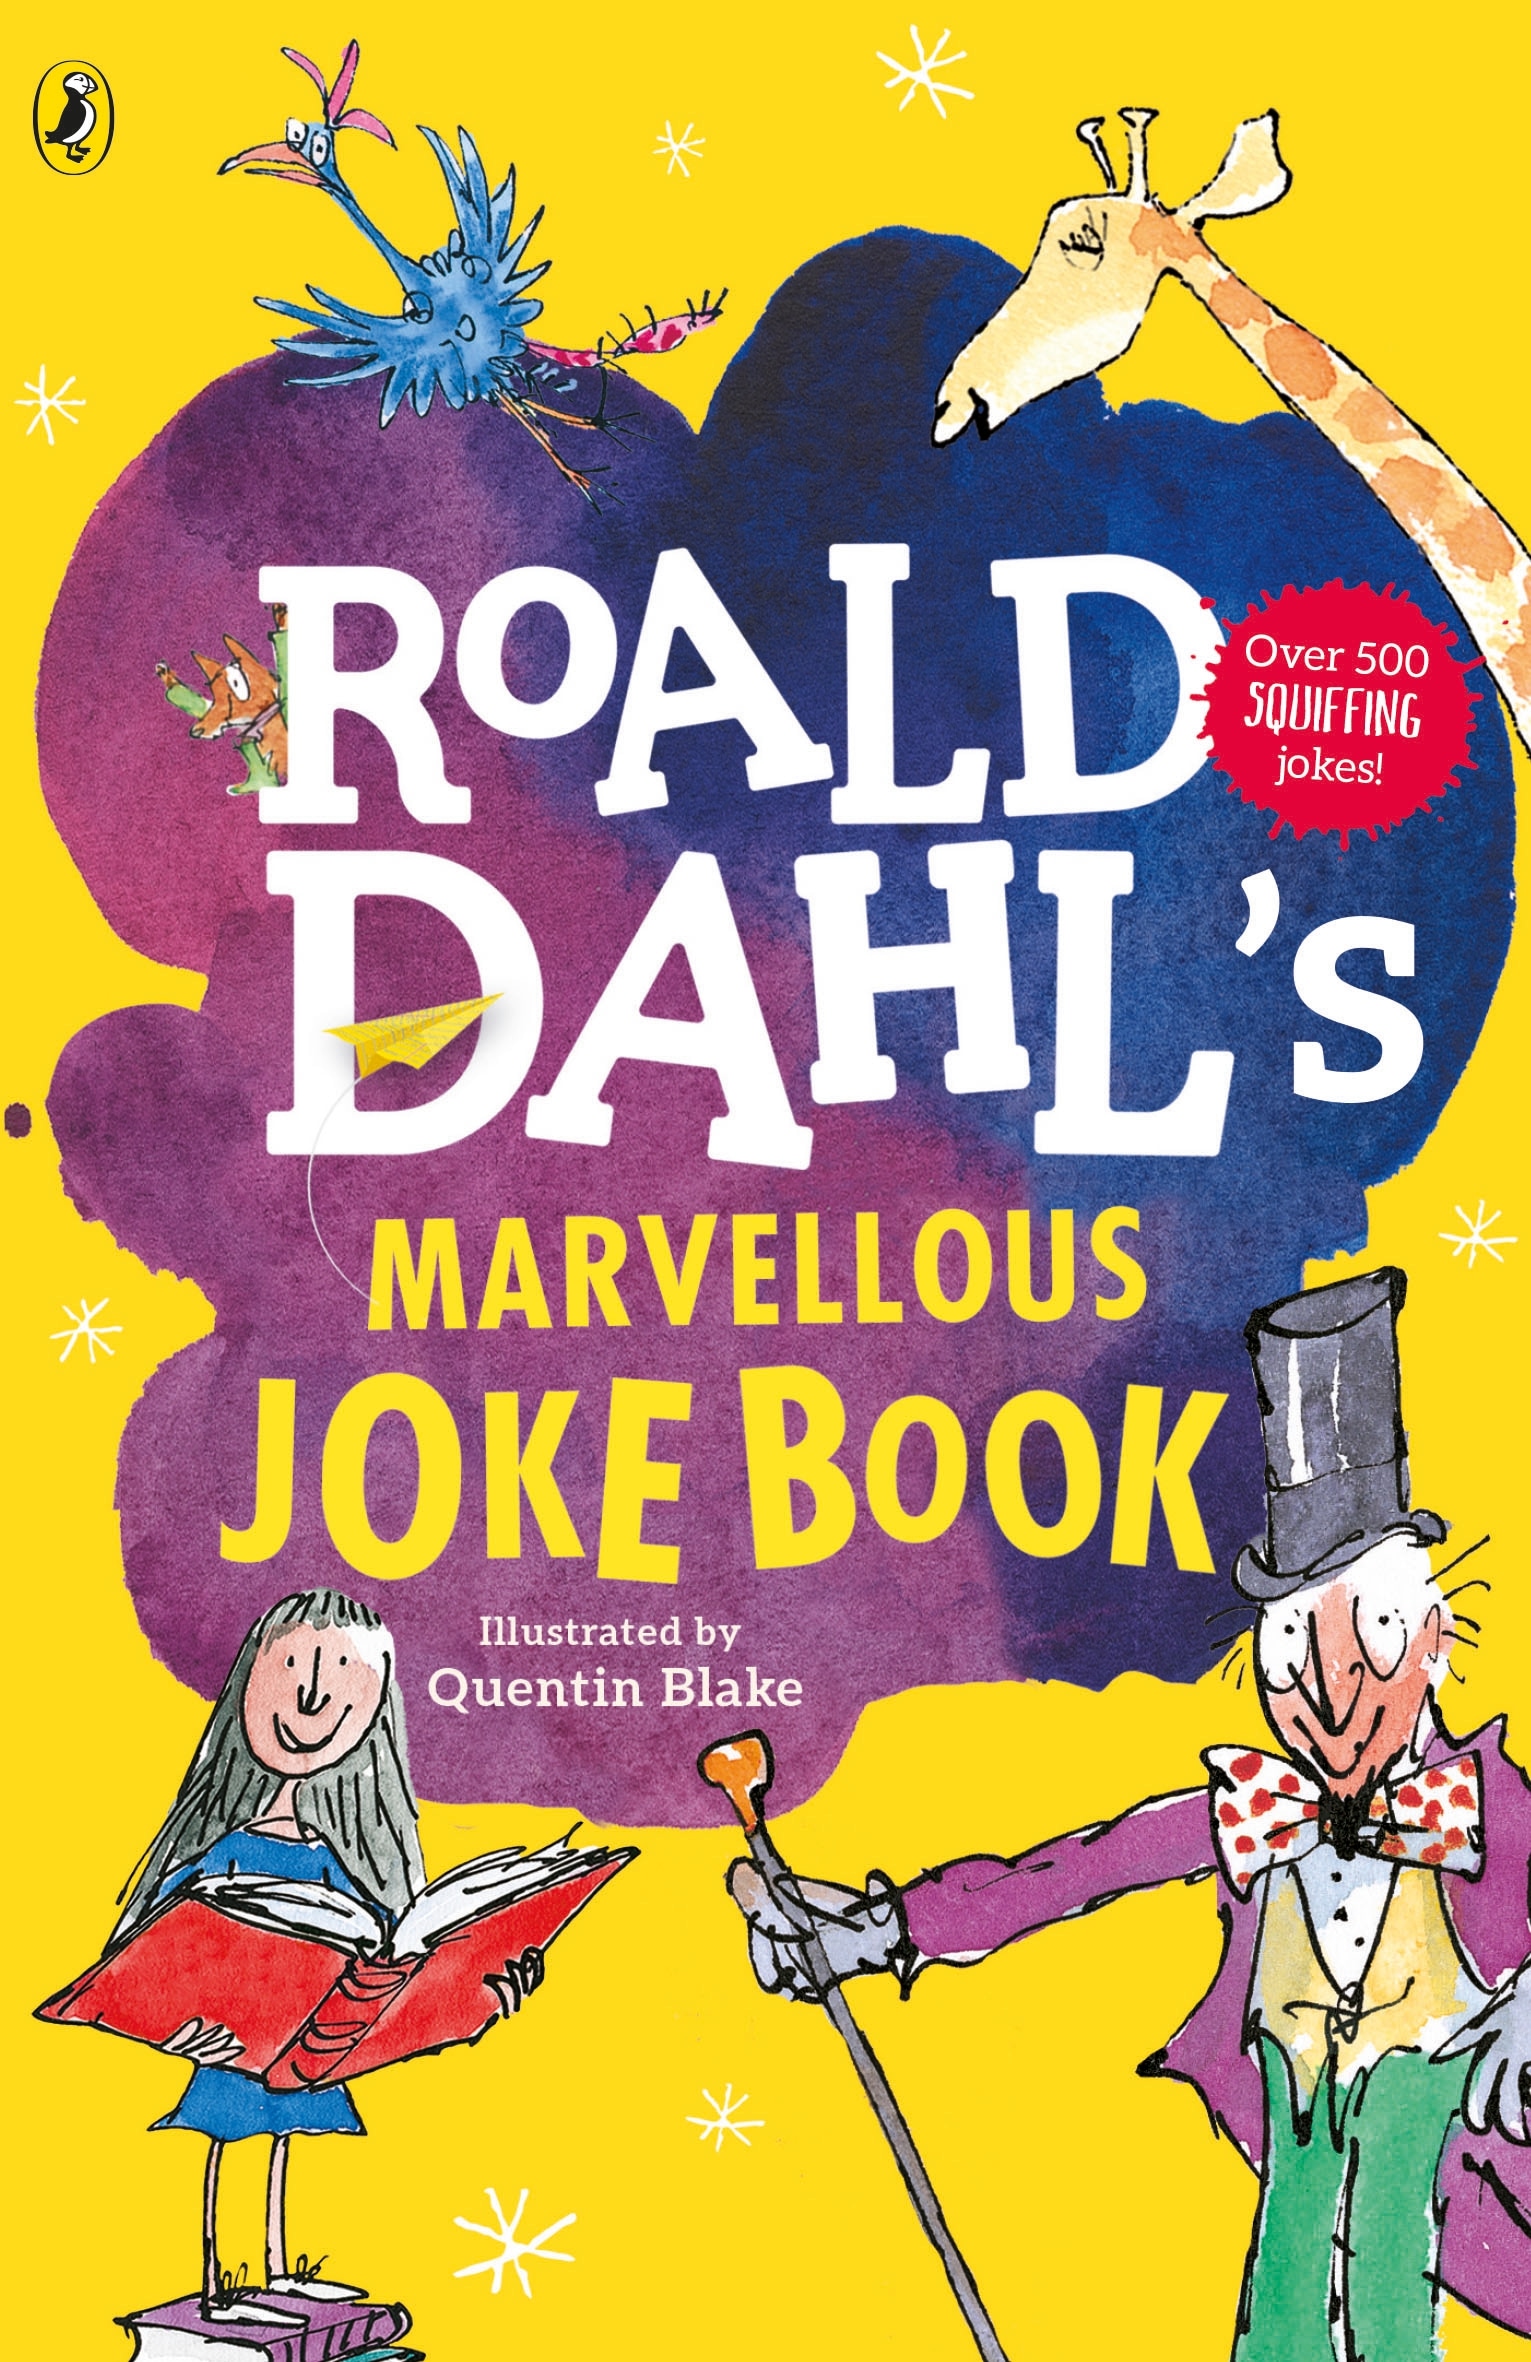 Book “Roald Dahl's Marvellous Joke Book” by Roald Dahl — September 6, 2012